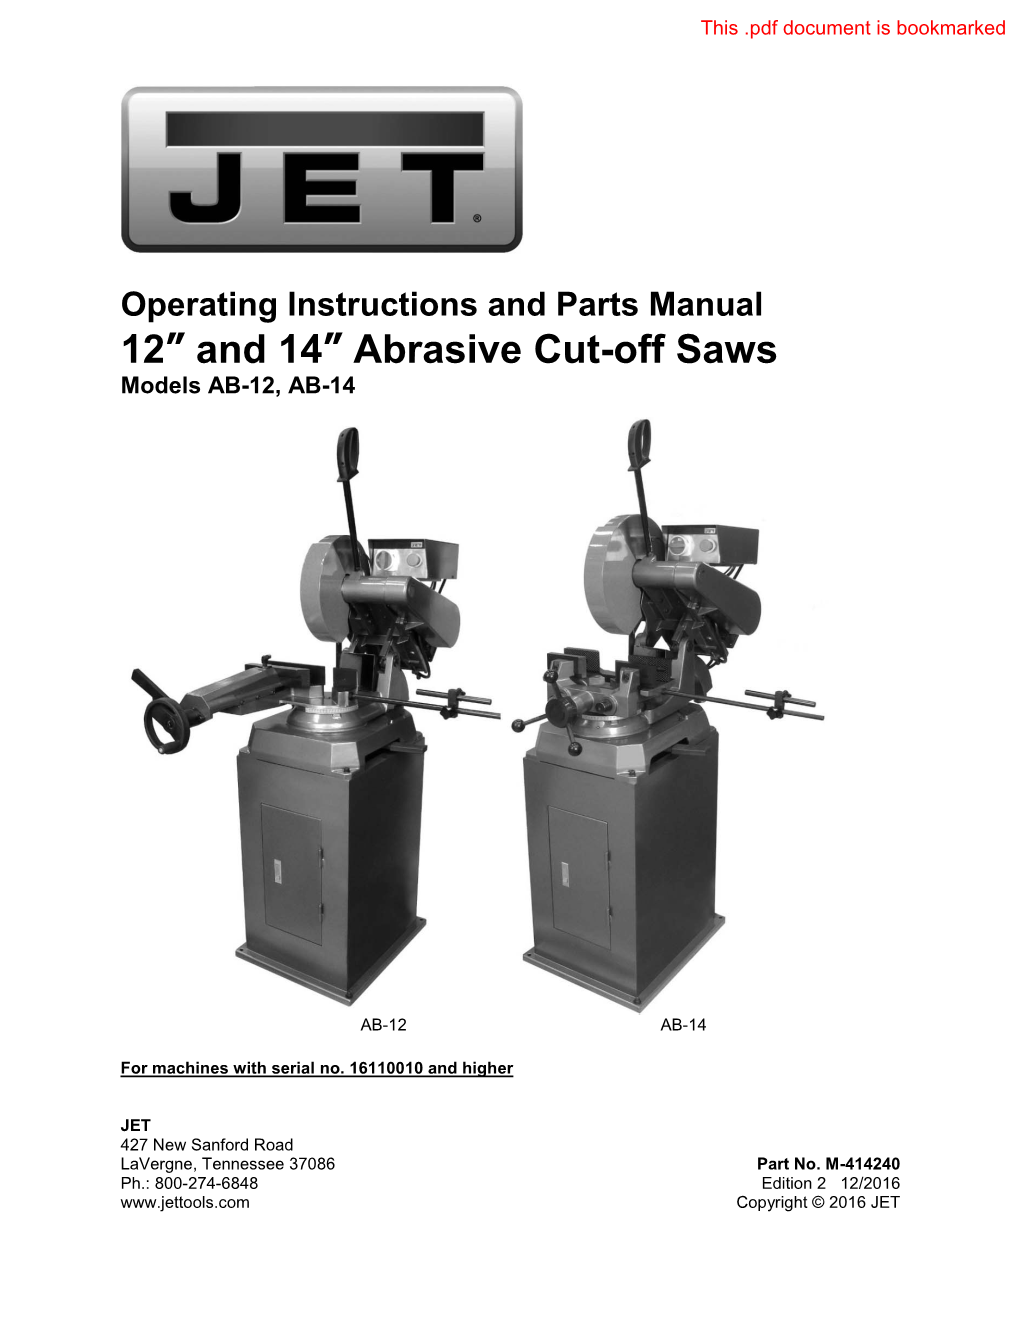 Abrasive Cut-Off Saws Models AB-12, AB-14